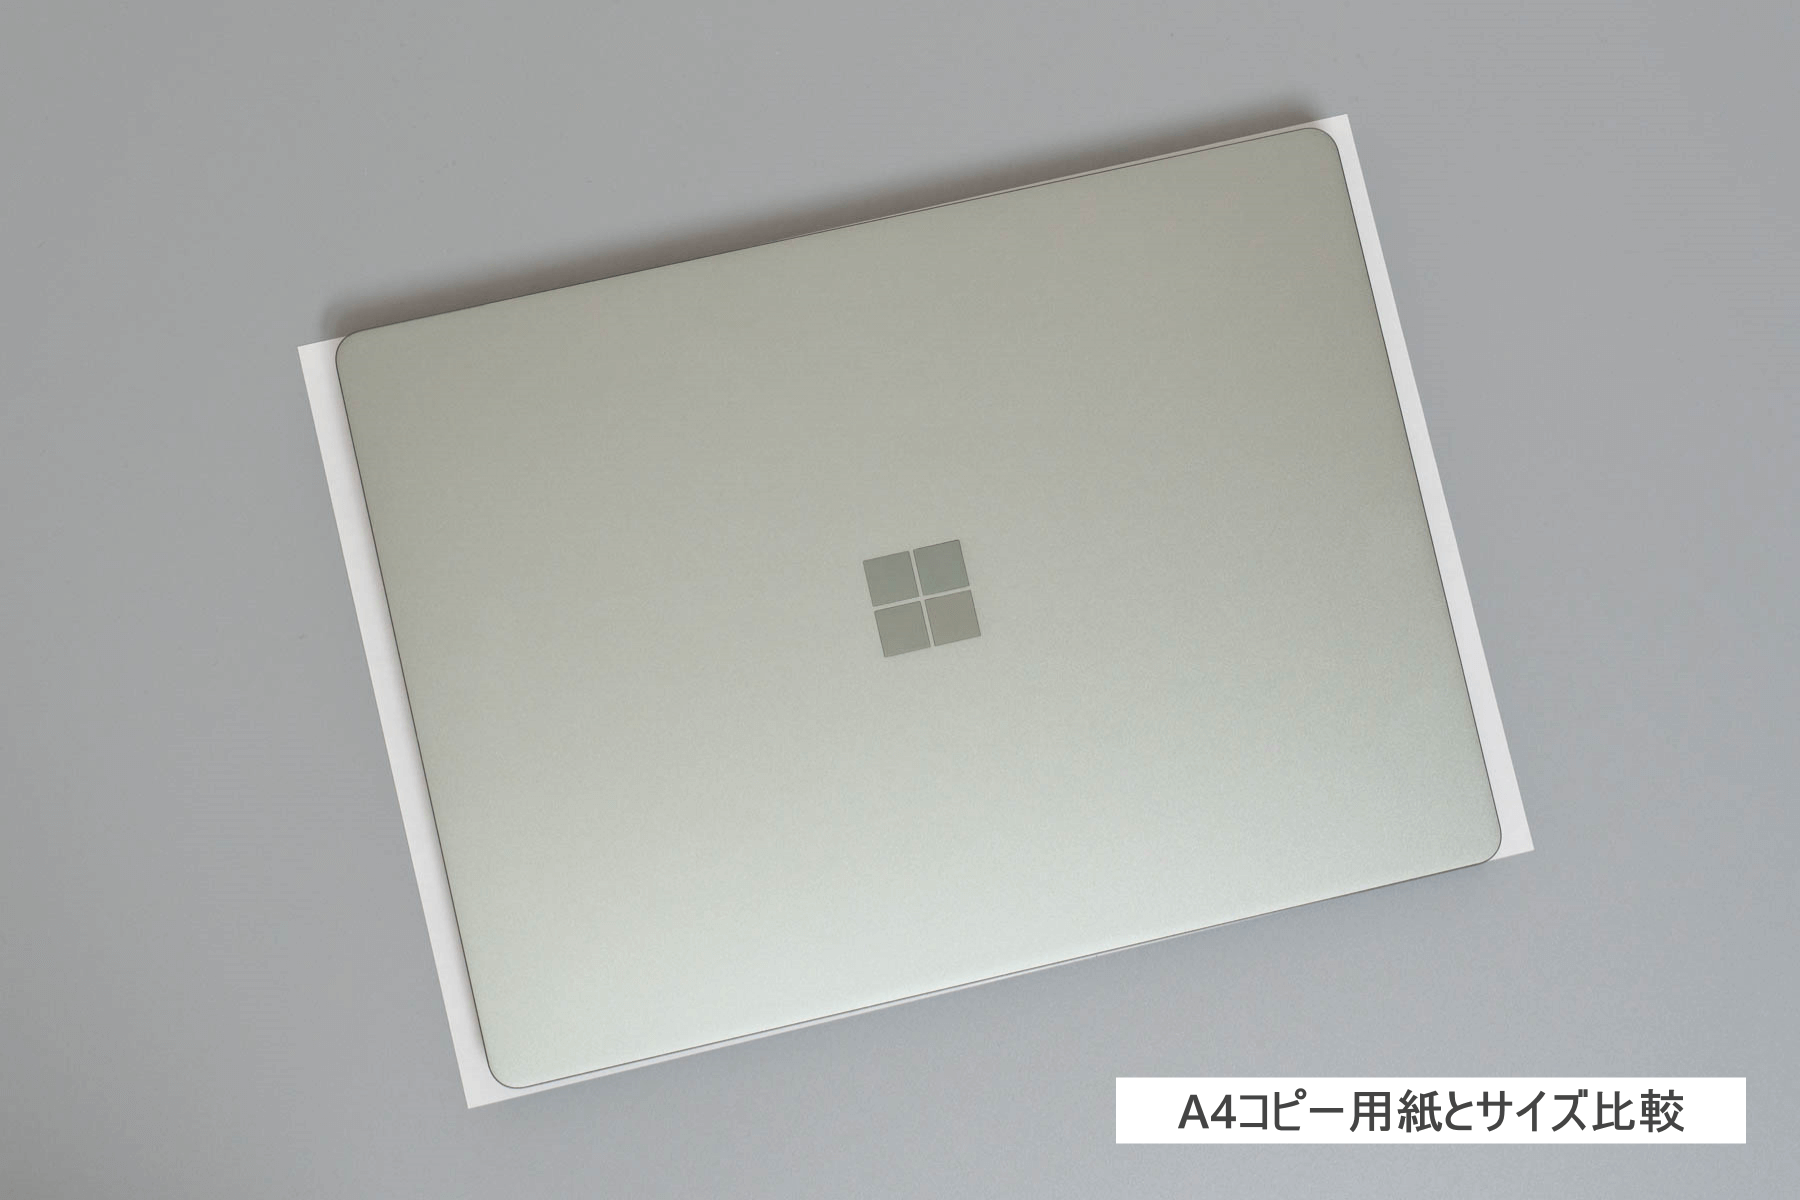 Surface Laptop Go 2 と A4 コピー用紙でサイズを比較